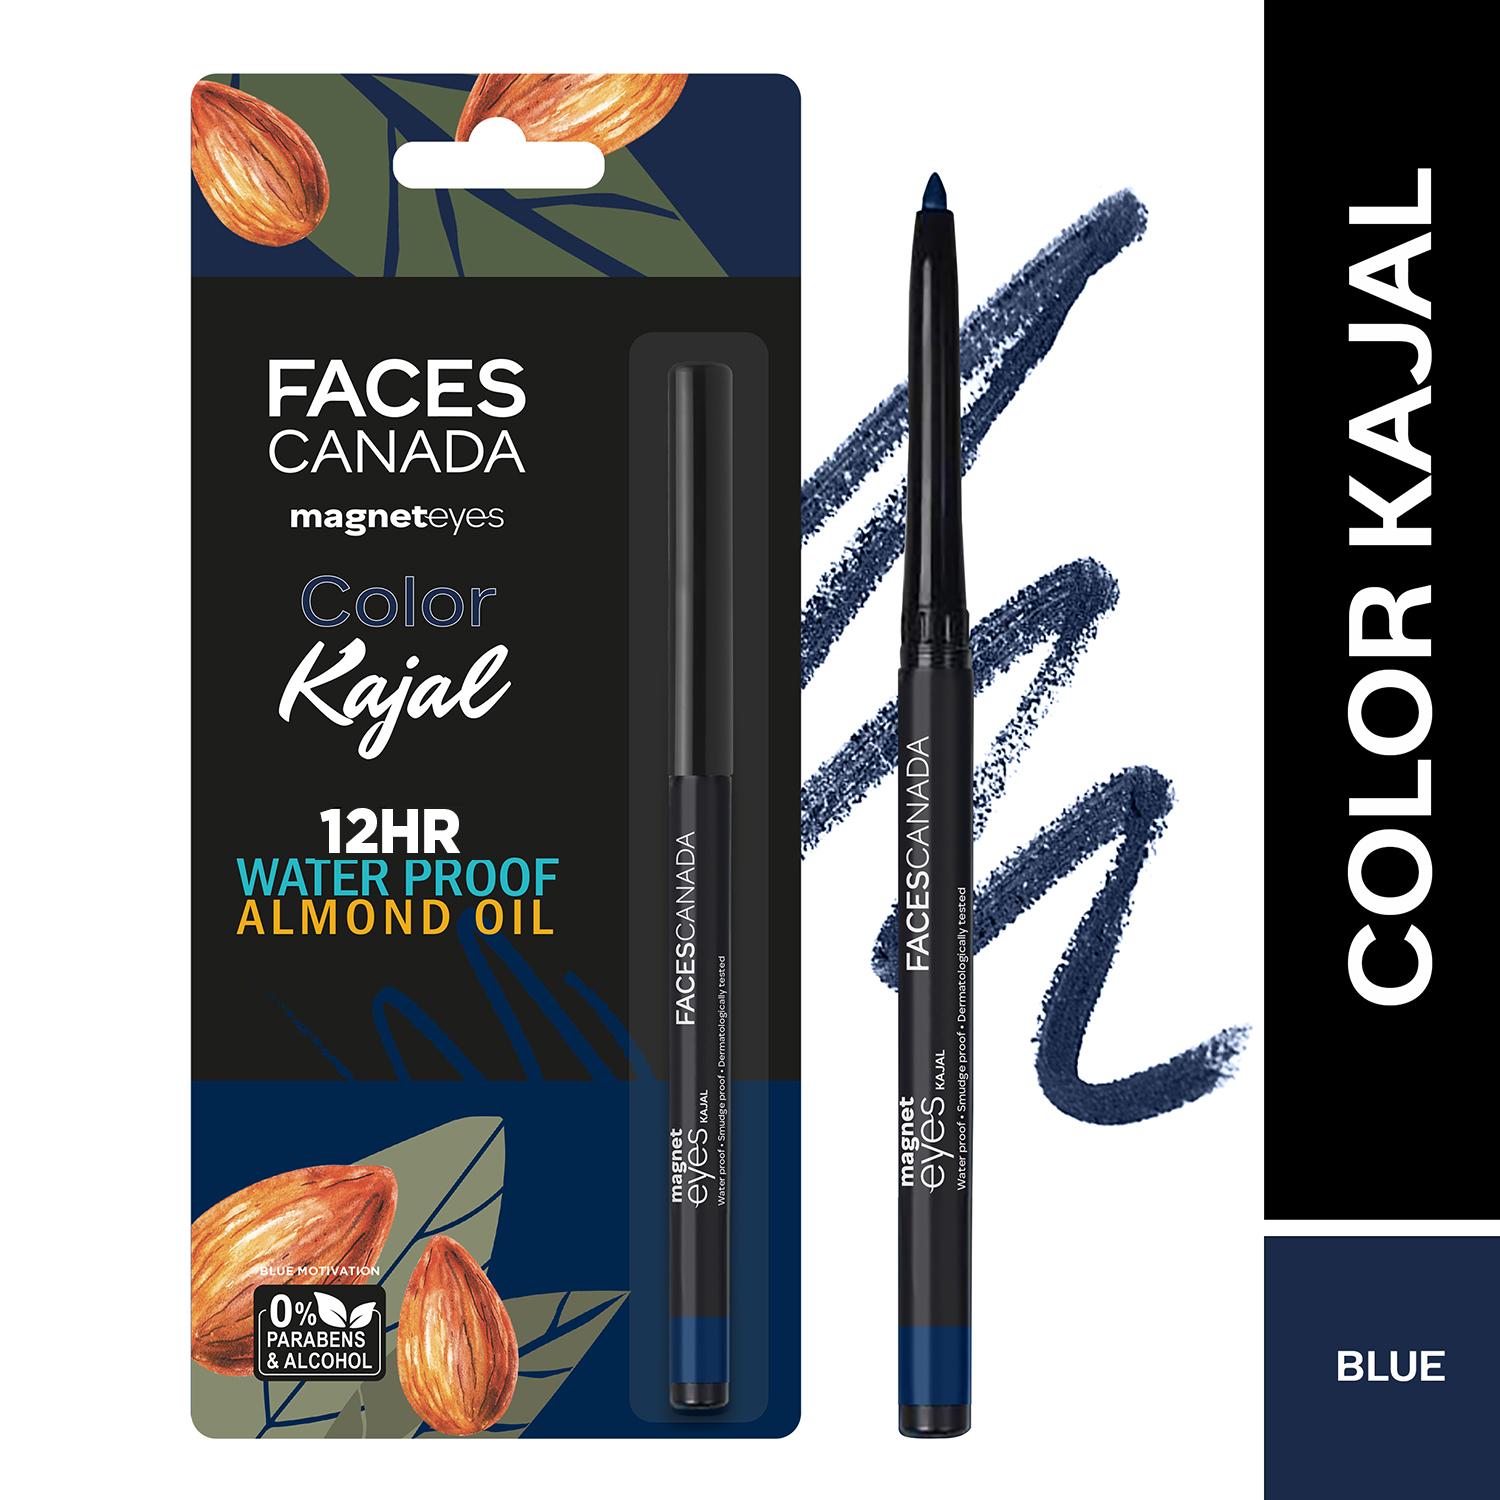 Faces Canada | Faces Canada Magneteyes Color Kajal - Blue Motivation 01, 12 HR Stay, Matte Finish (0.30 g)